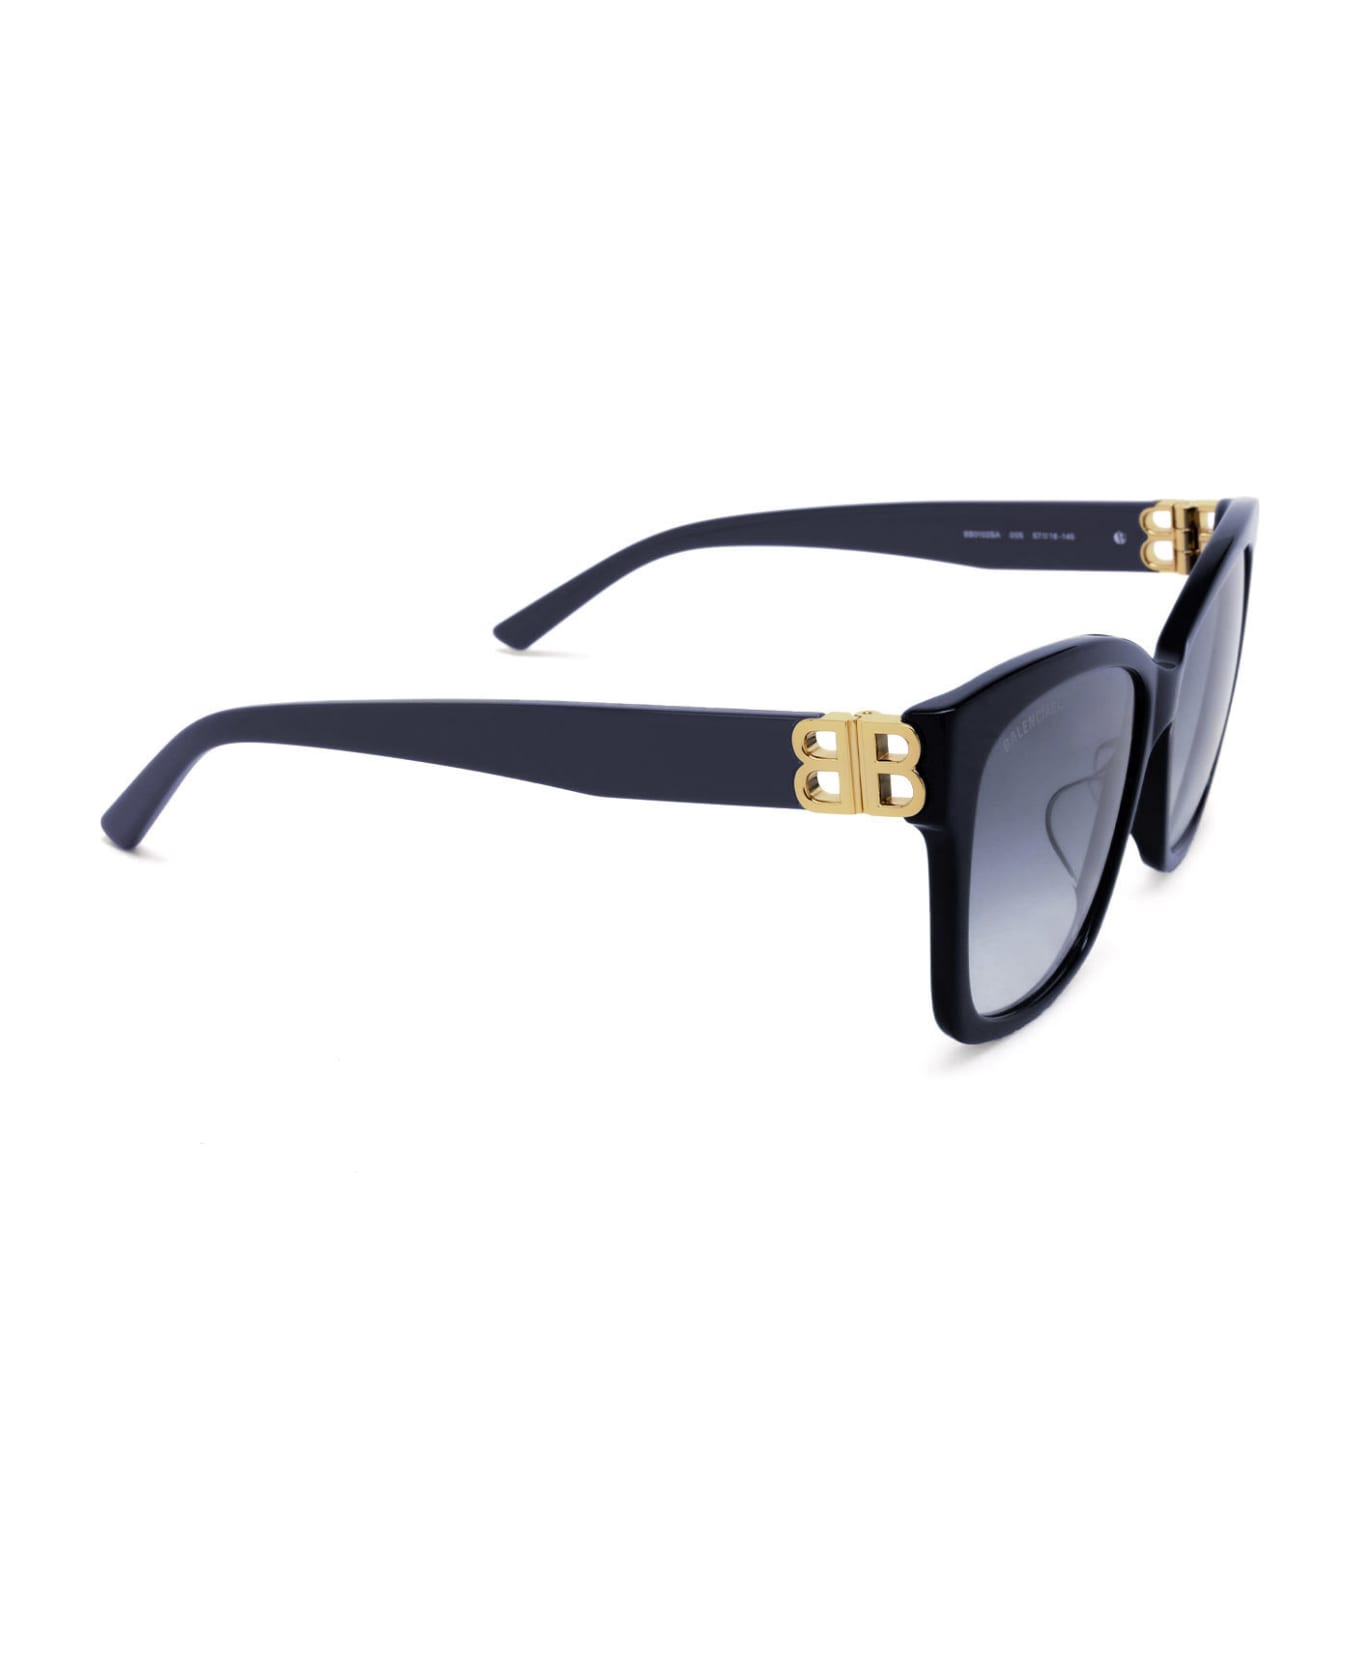 Balenciaga Eyewear Bb0102sa Sunglasses - Blue